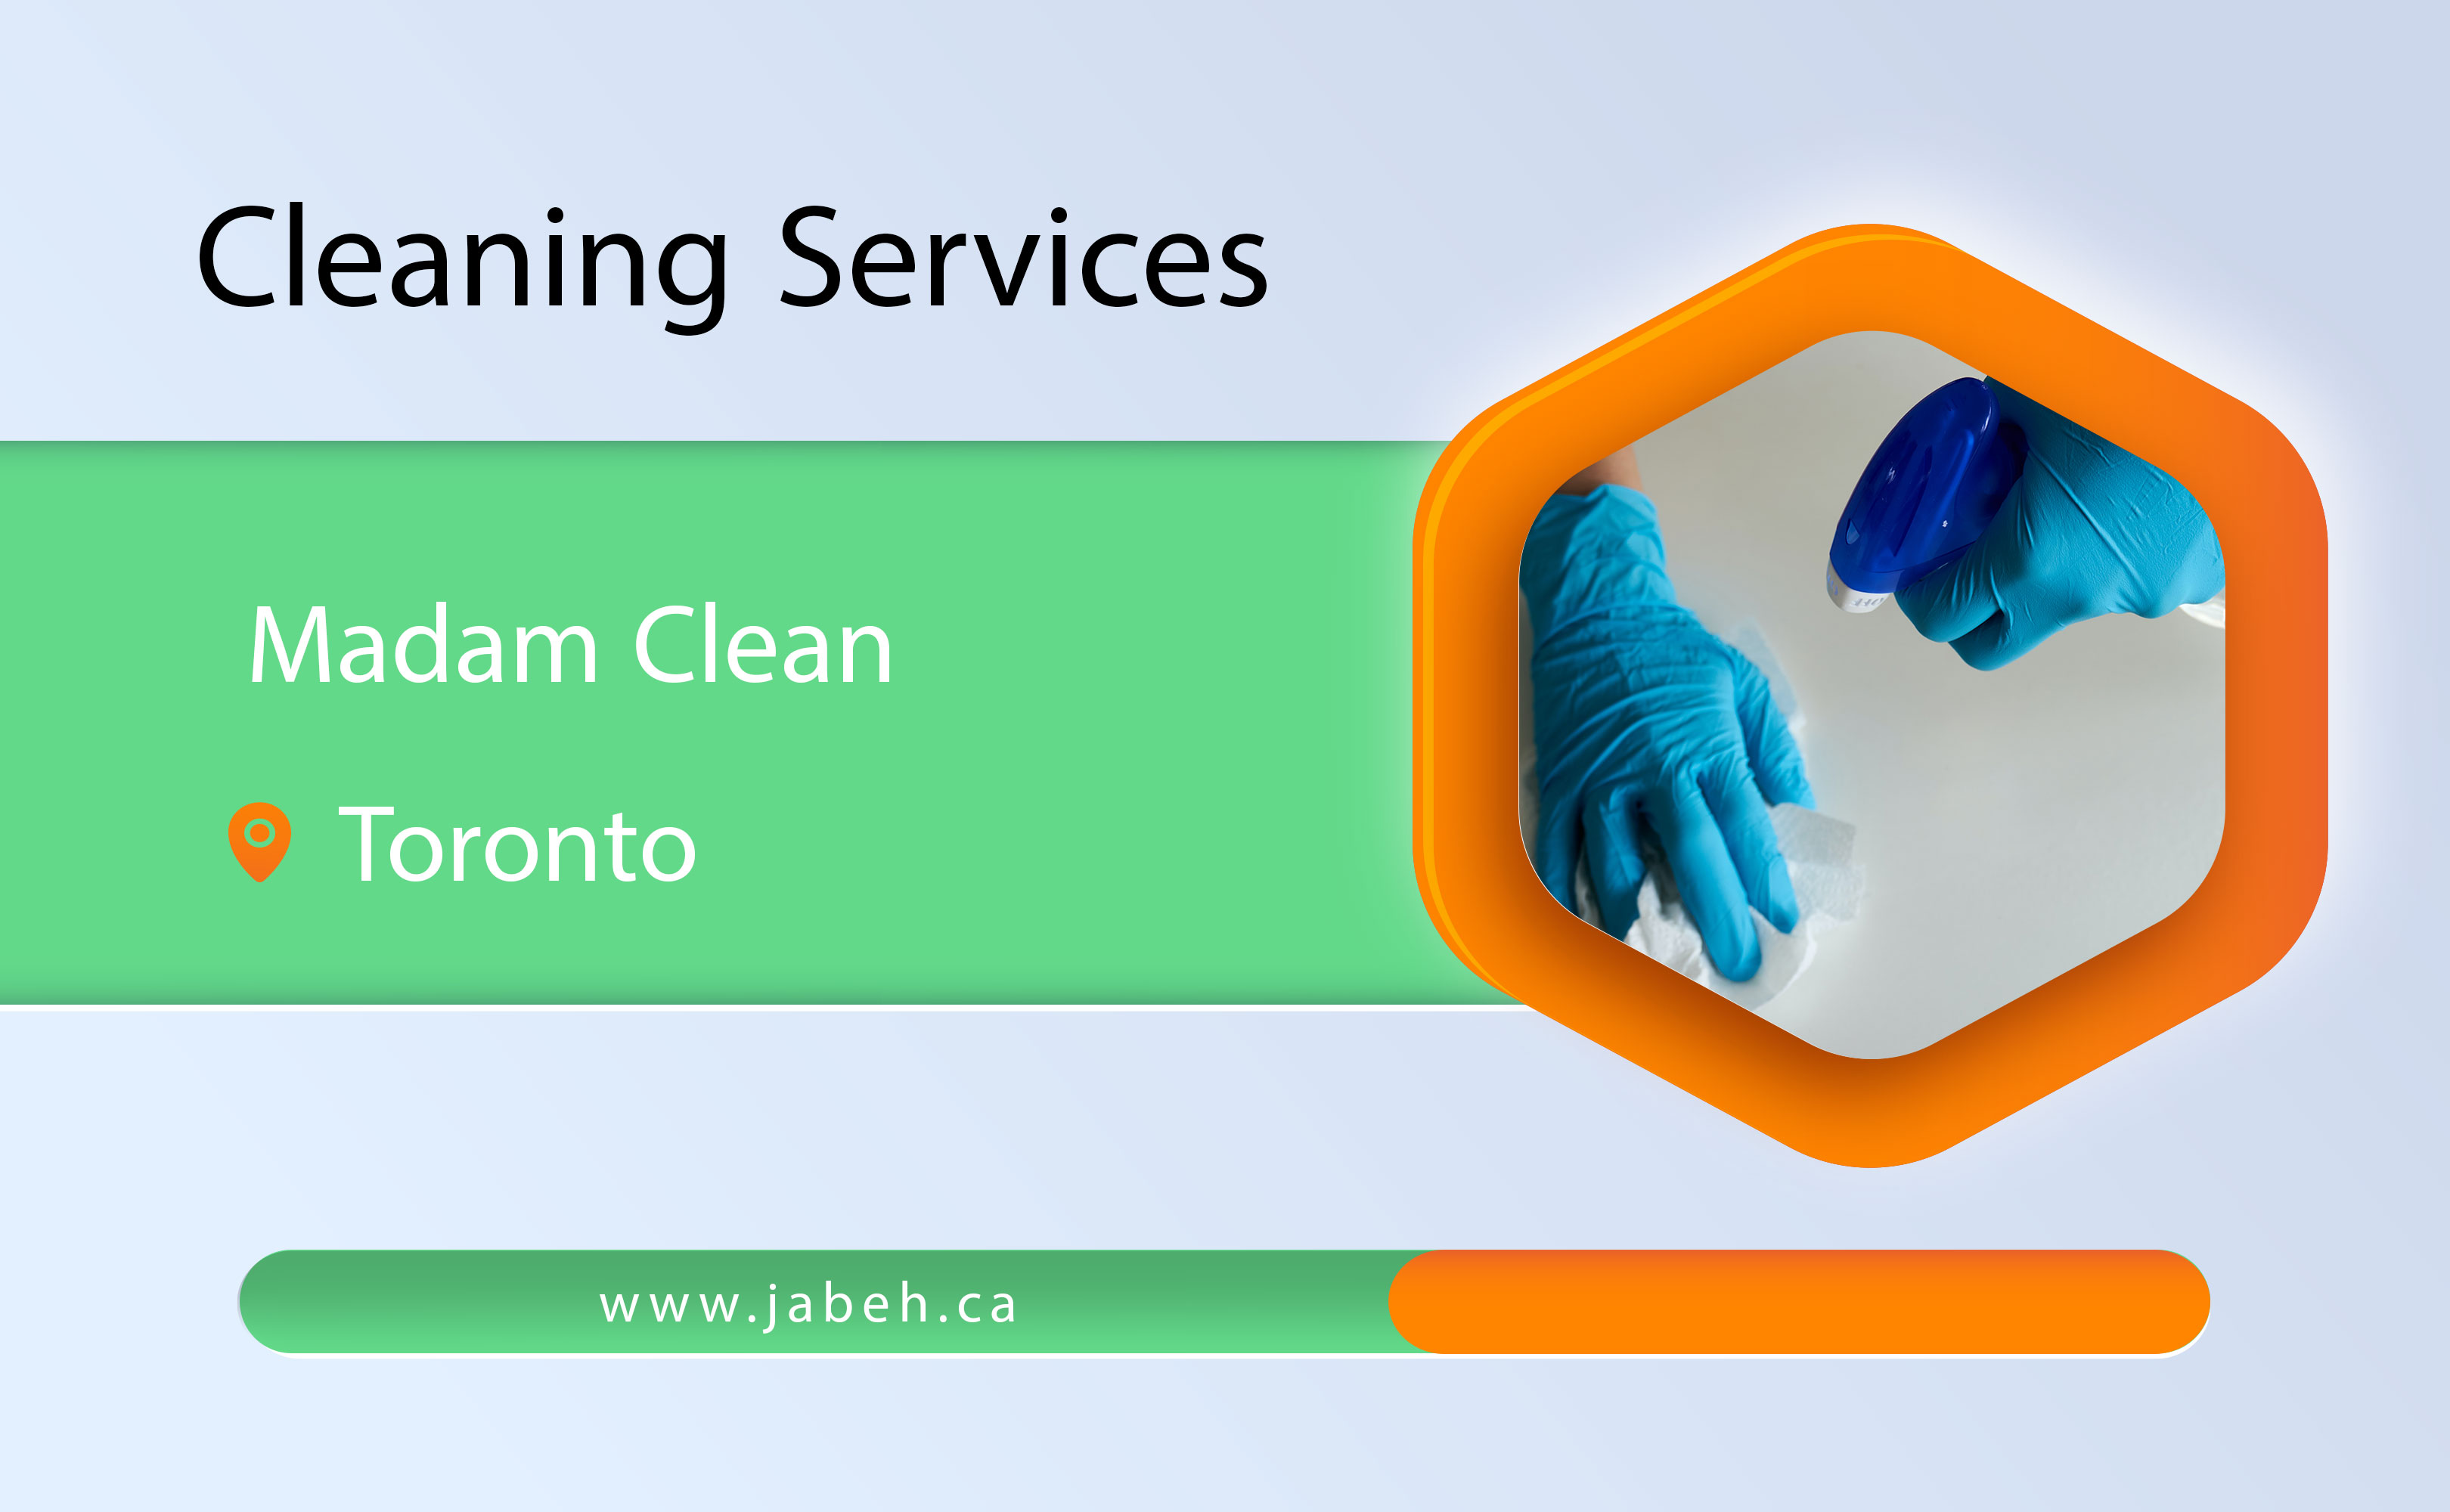 Madam Clean Service in Toronto